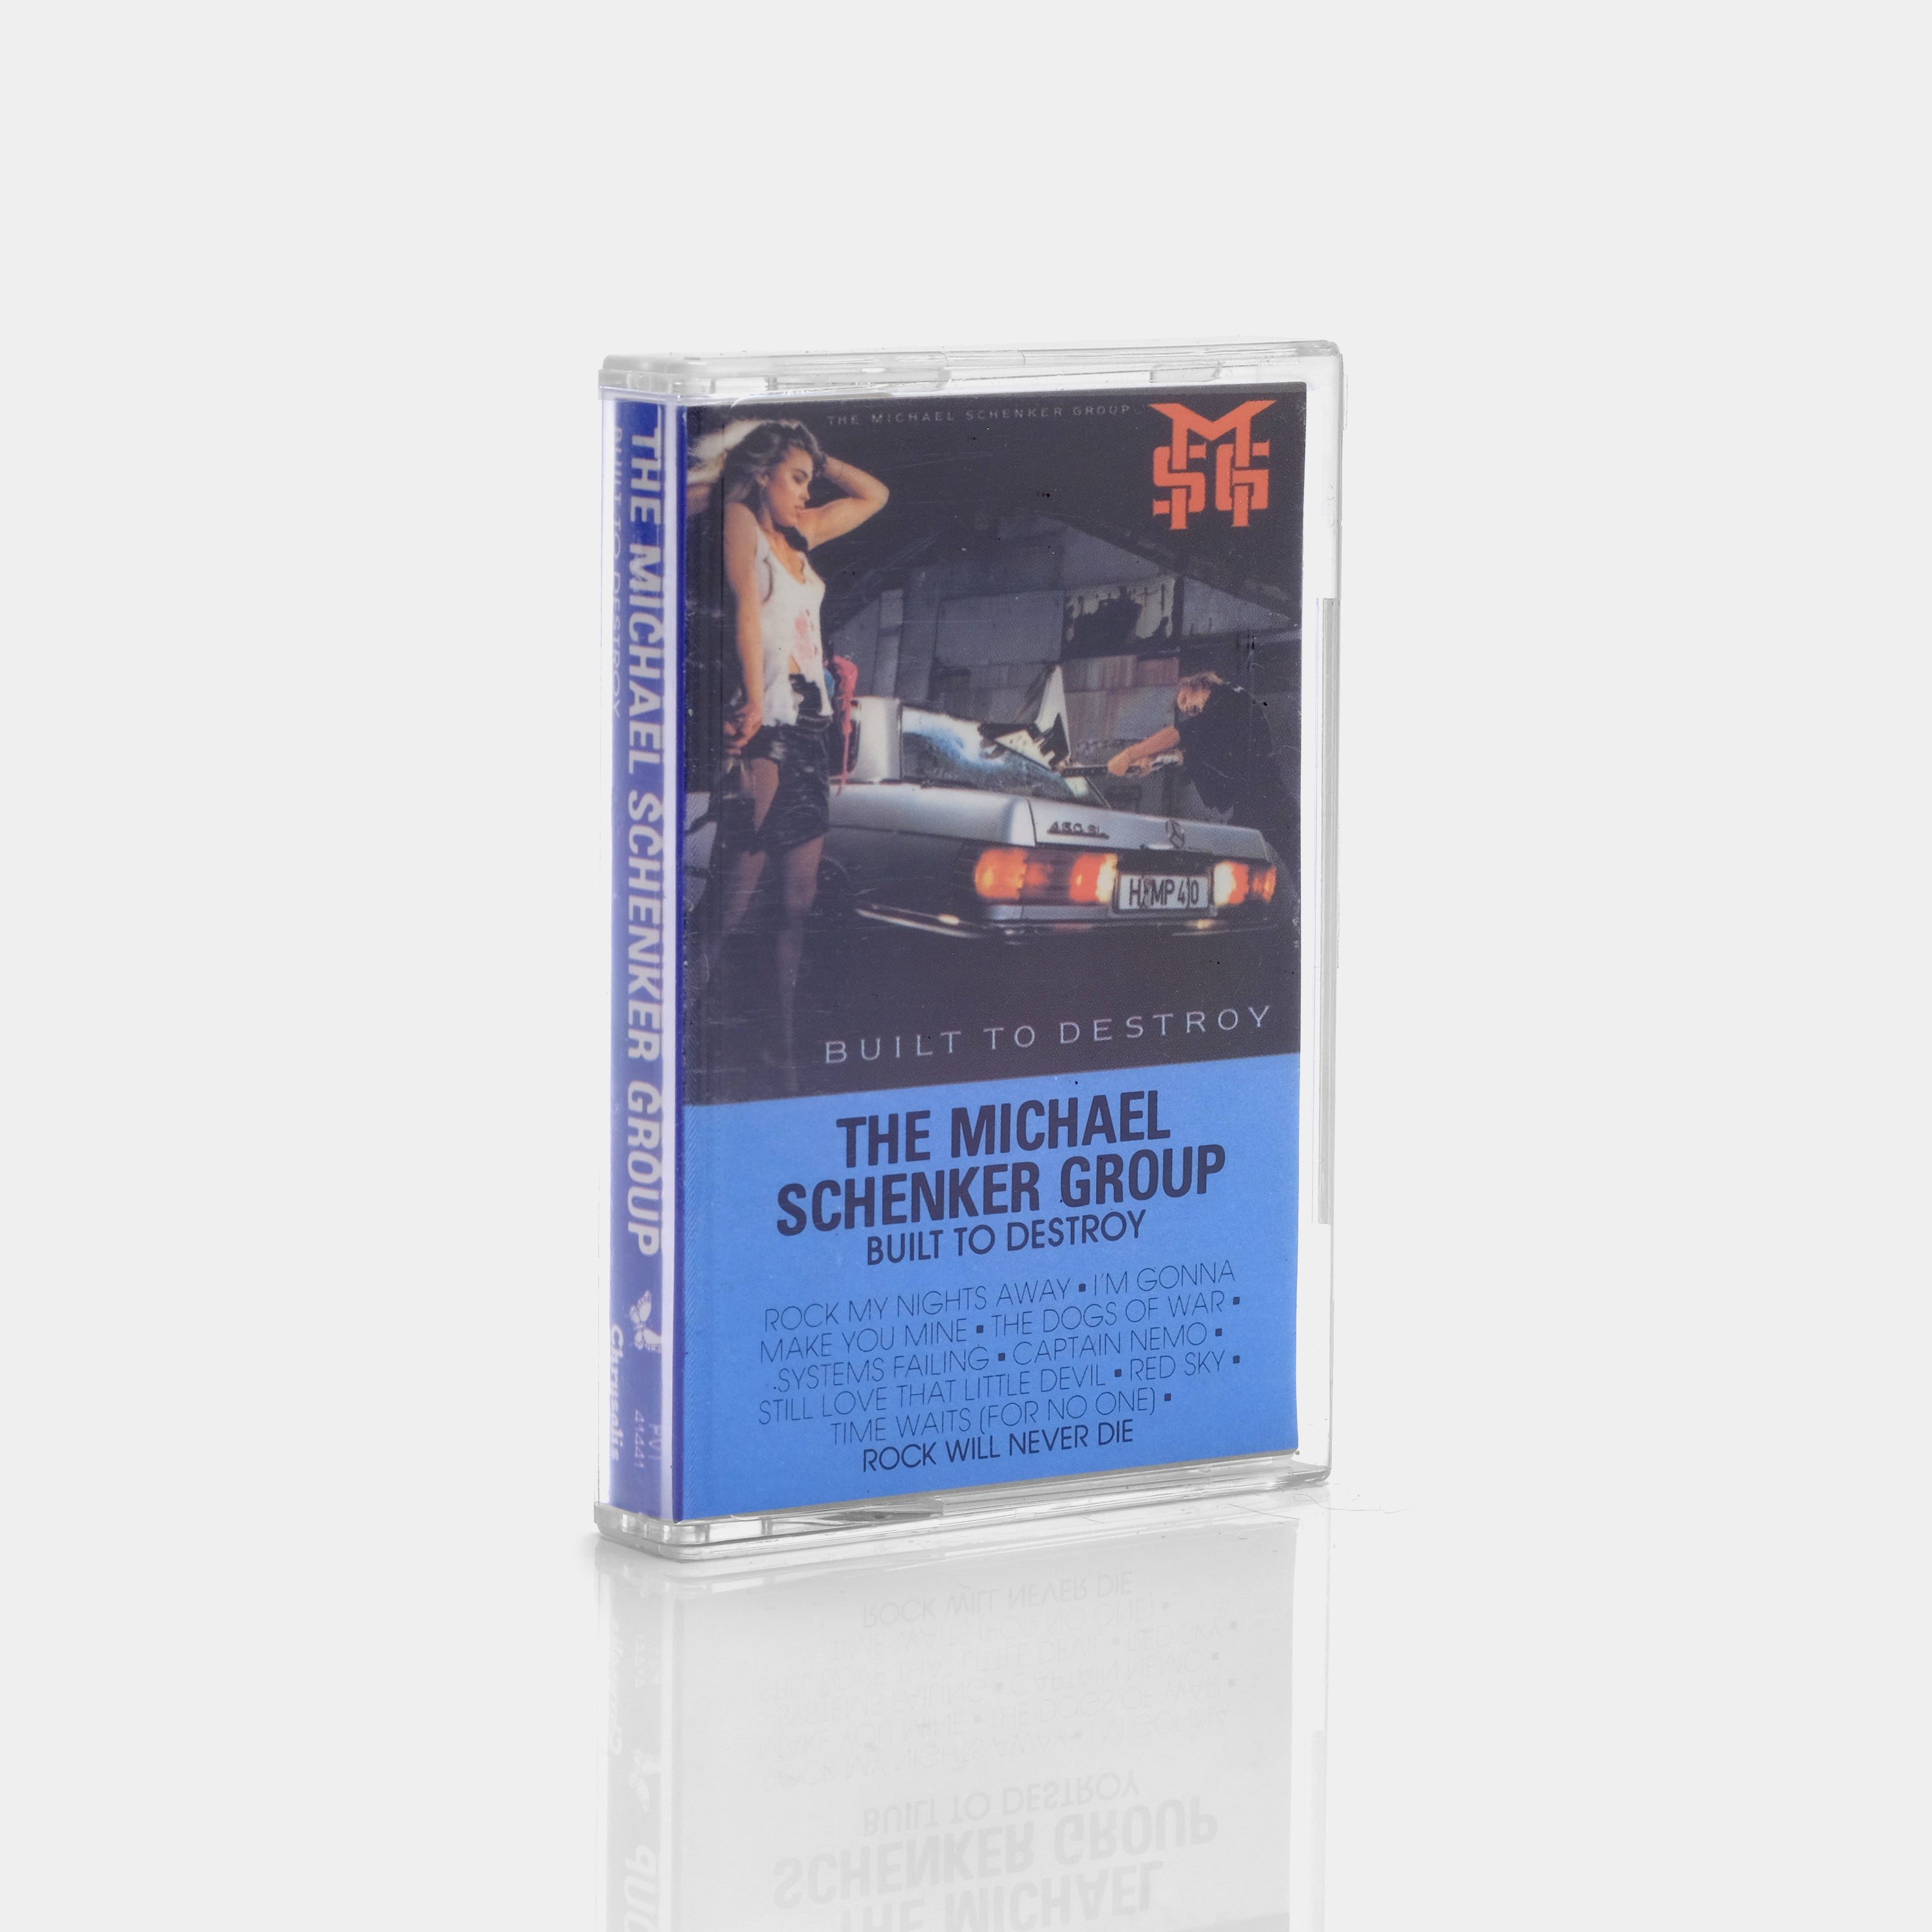 The Michael Schenker Group - Built To Destroy Cassette Tape